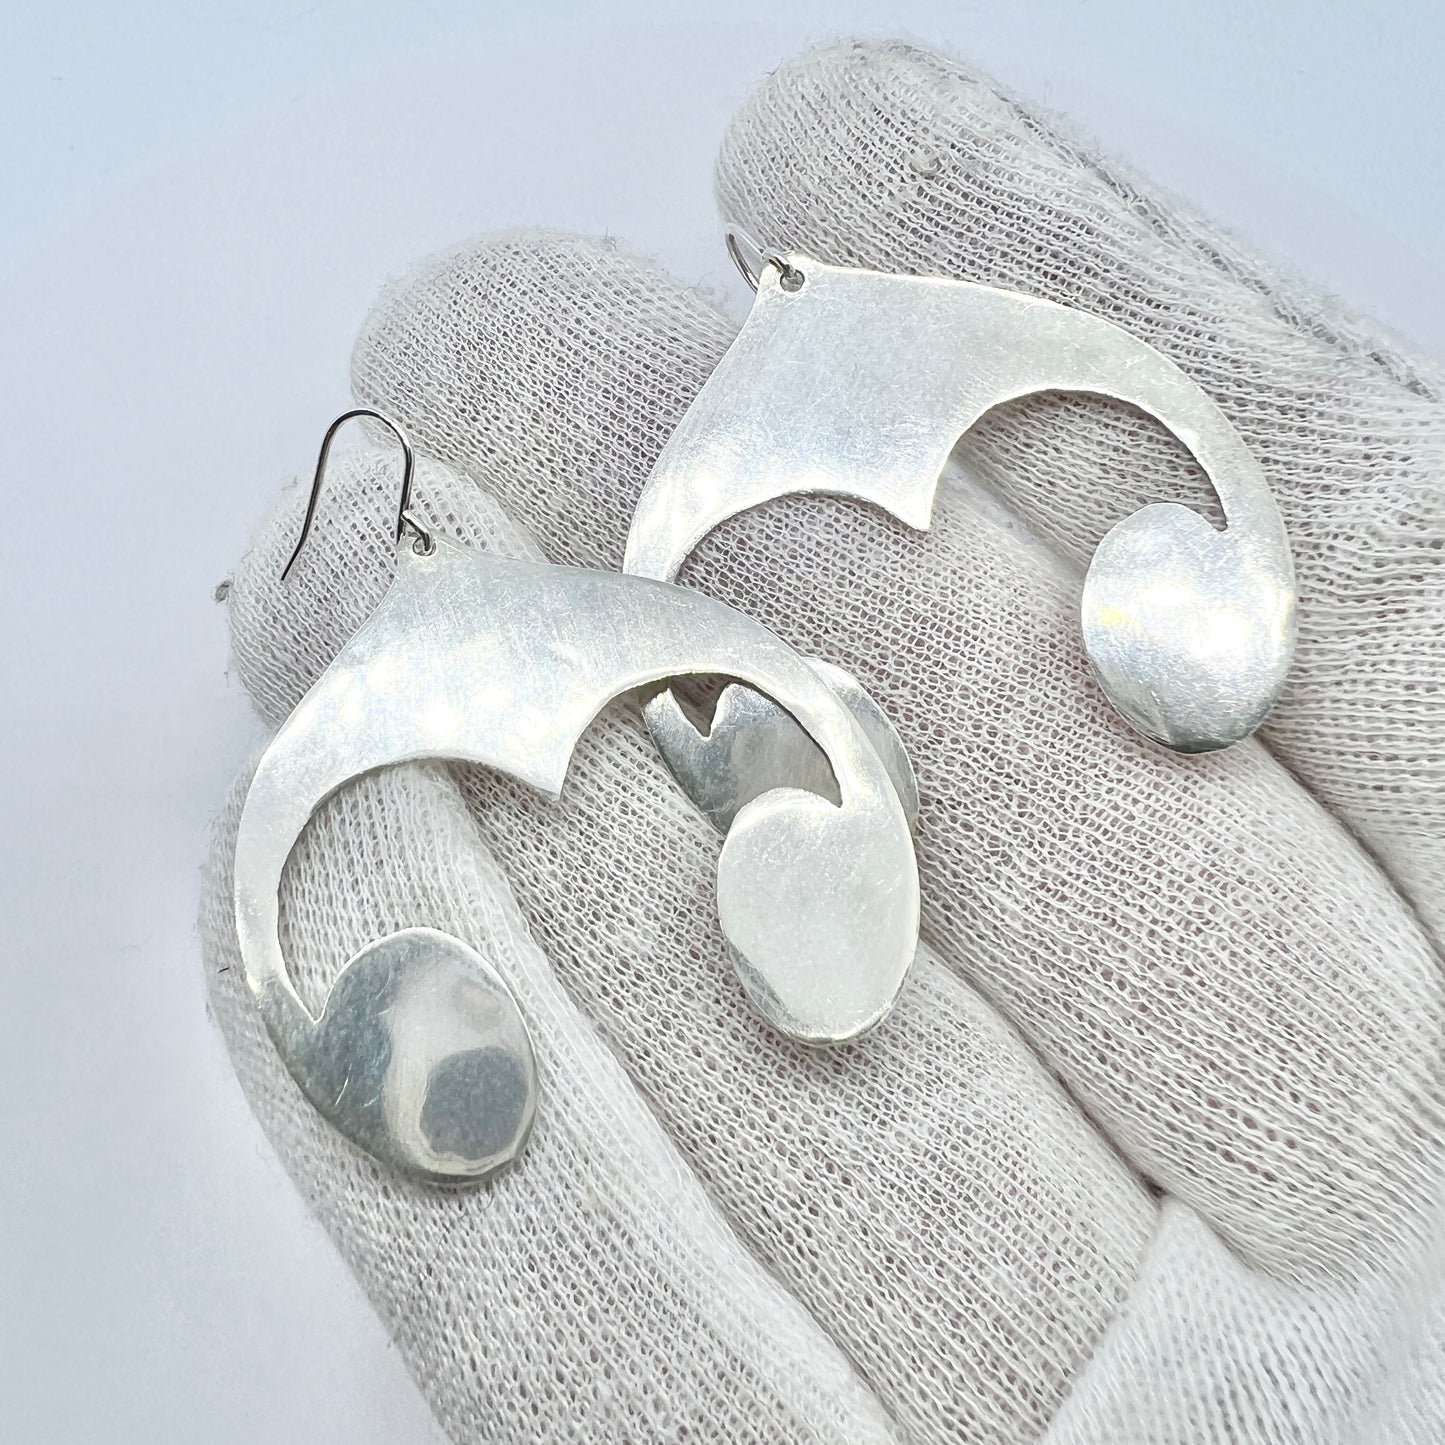 Hanne Dreutler, Sweden 1969. Vintage Large Pair of Sterling Silver Earrings.